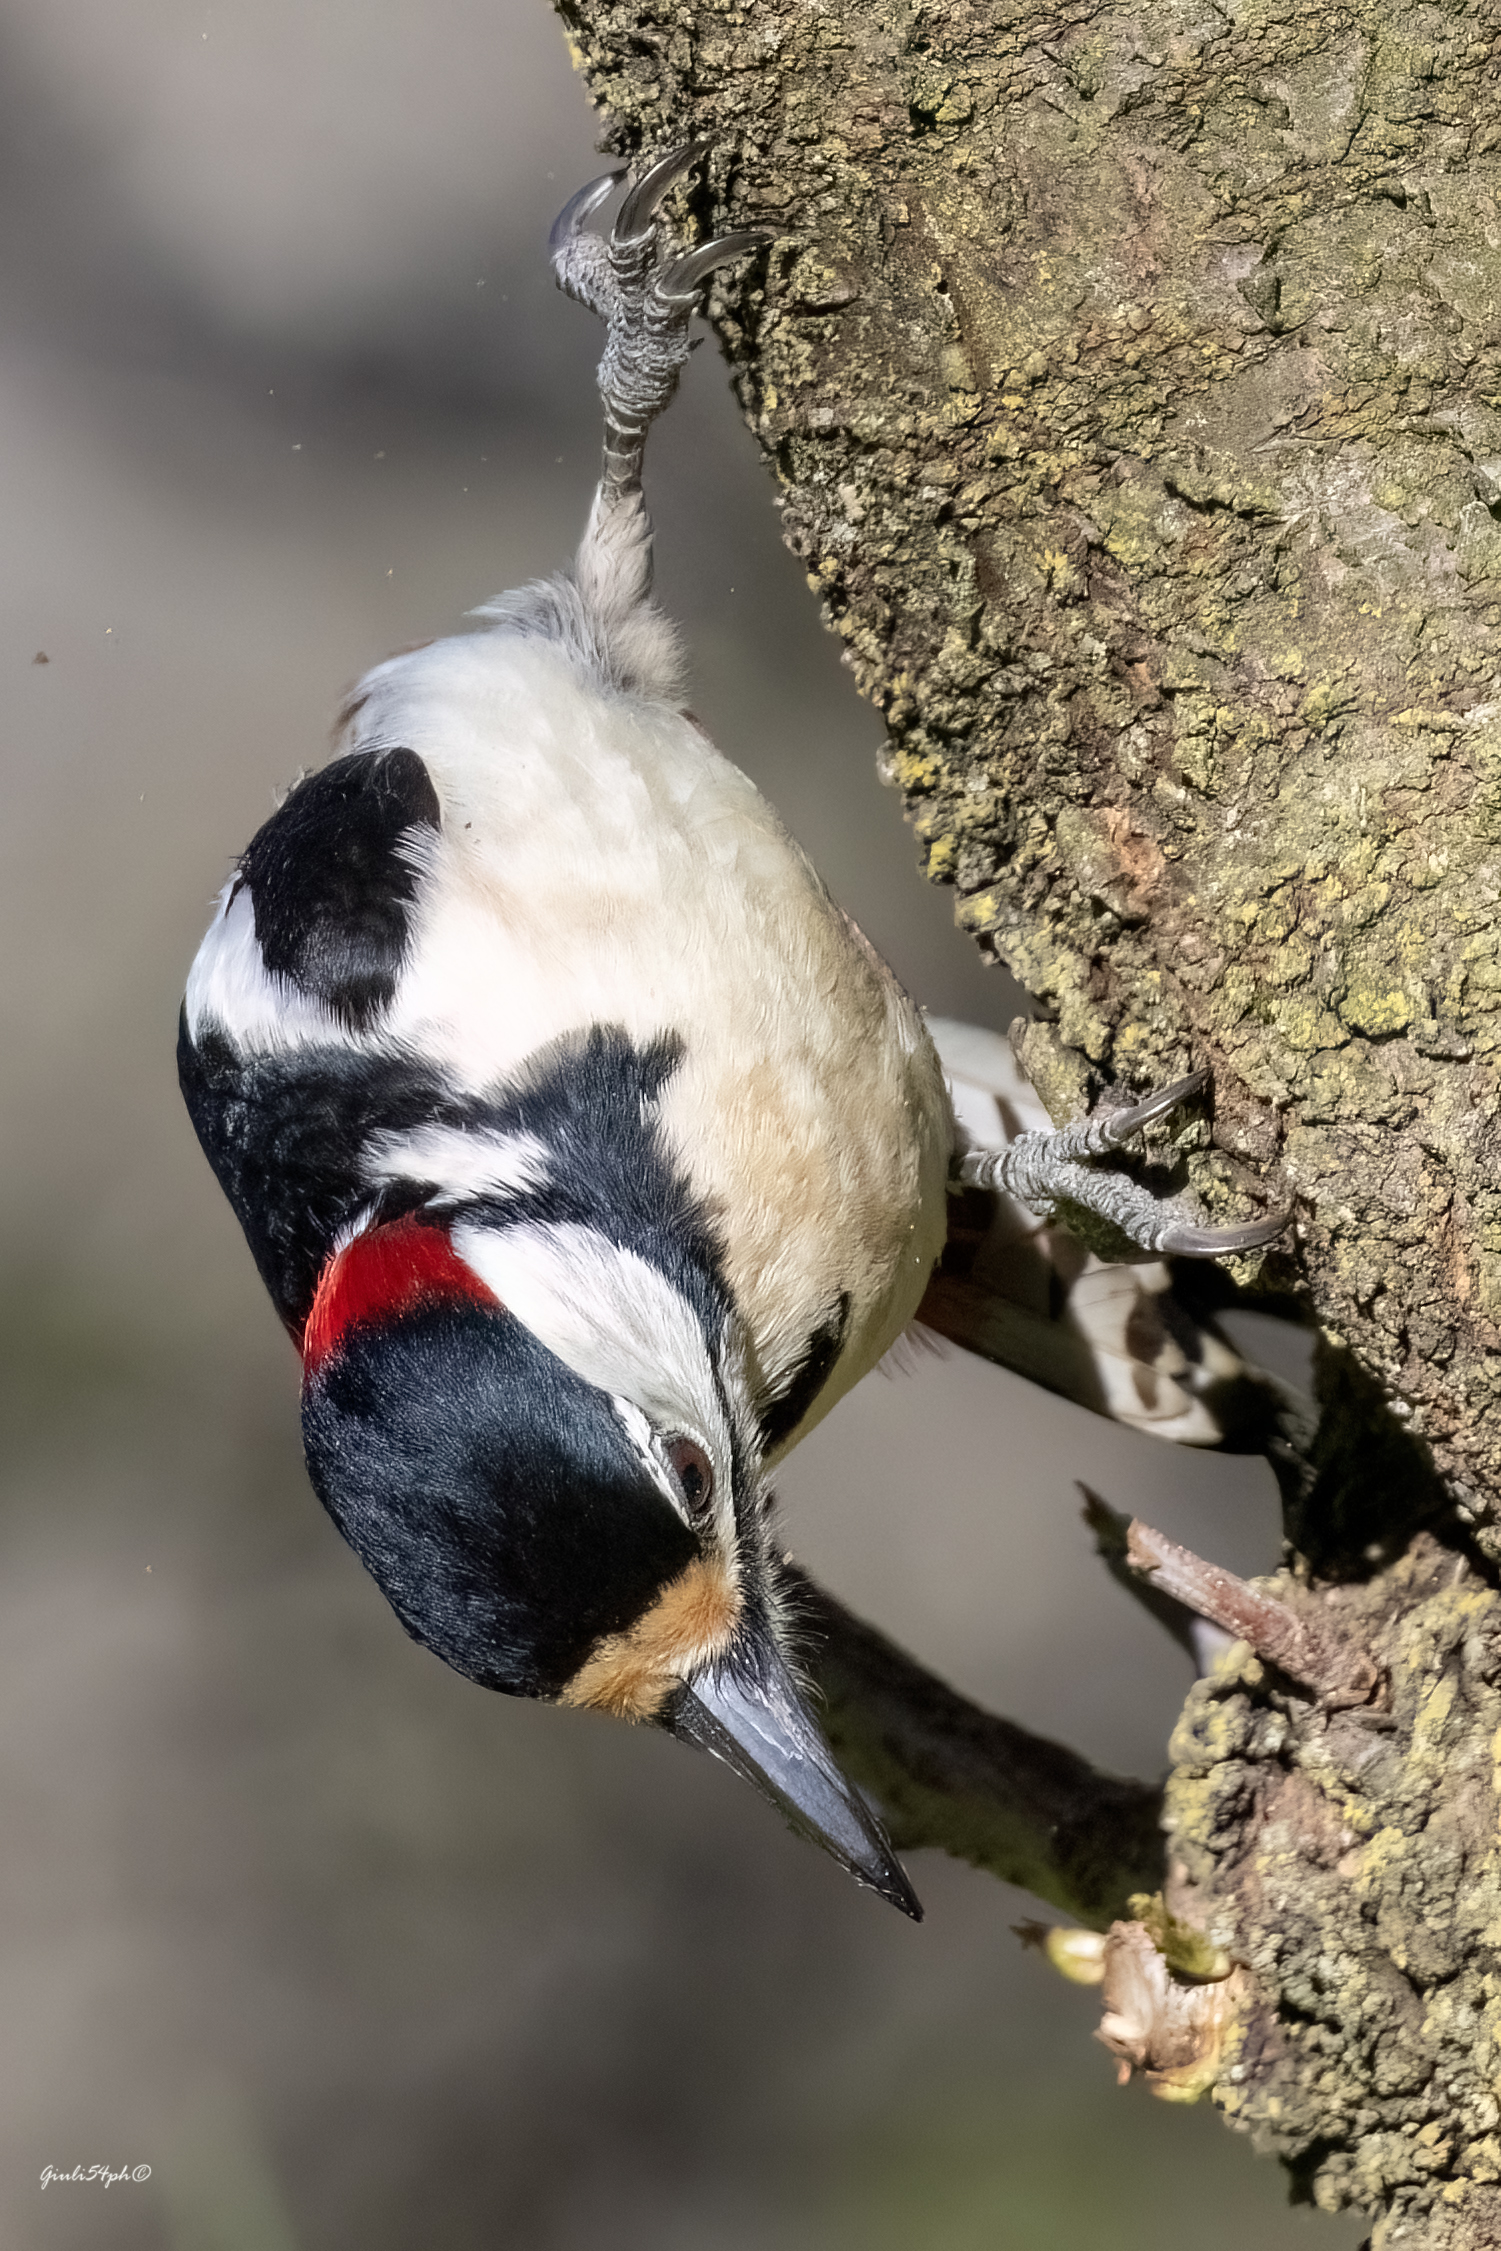 The Acrobat Woodpecker...